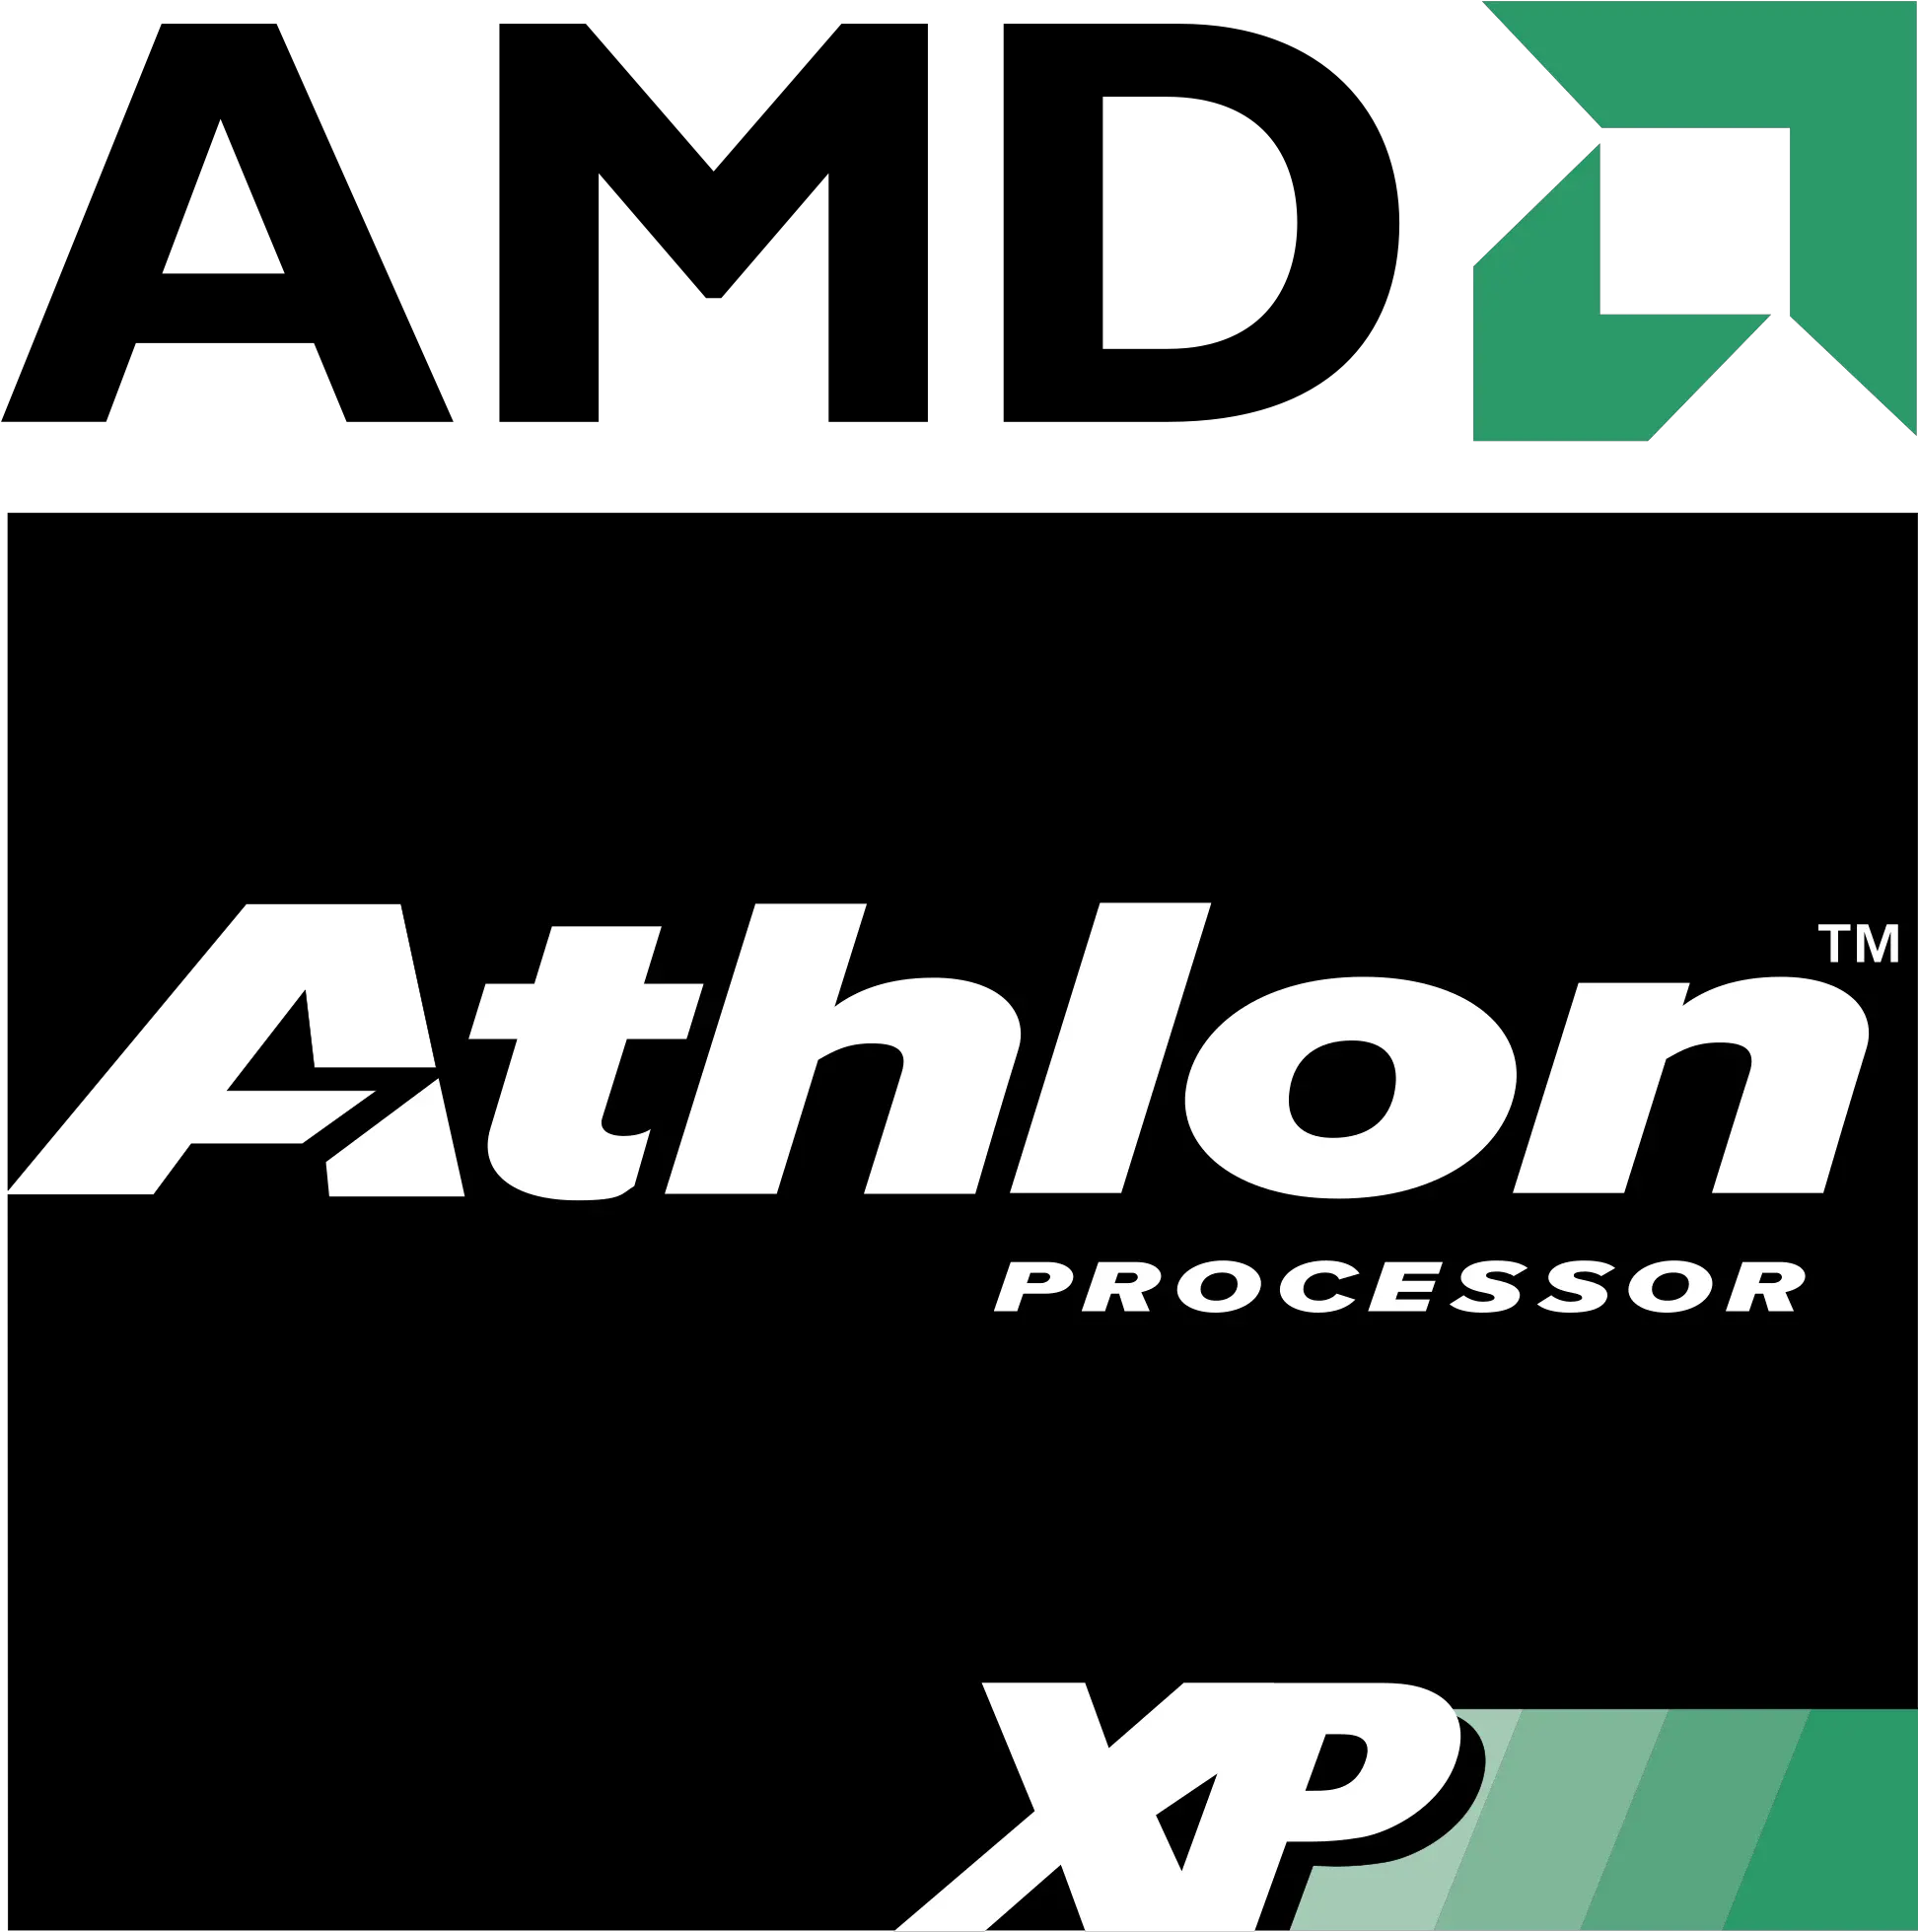 Amd Athlon Xp Processor Logo Png Amd Athlon Xp Logo Xp Logo